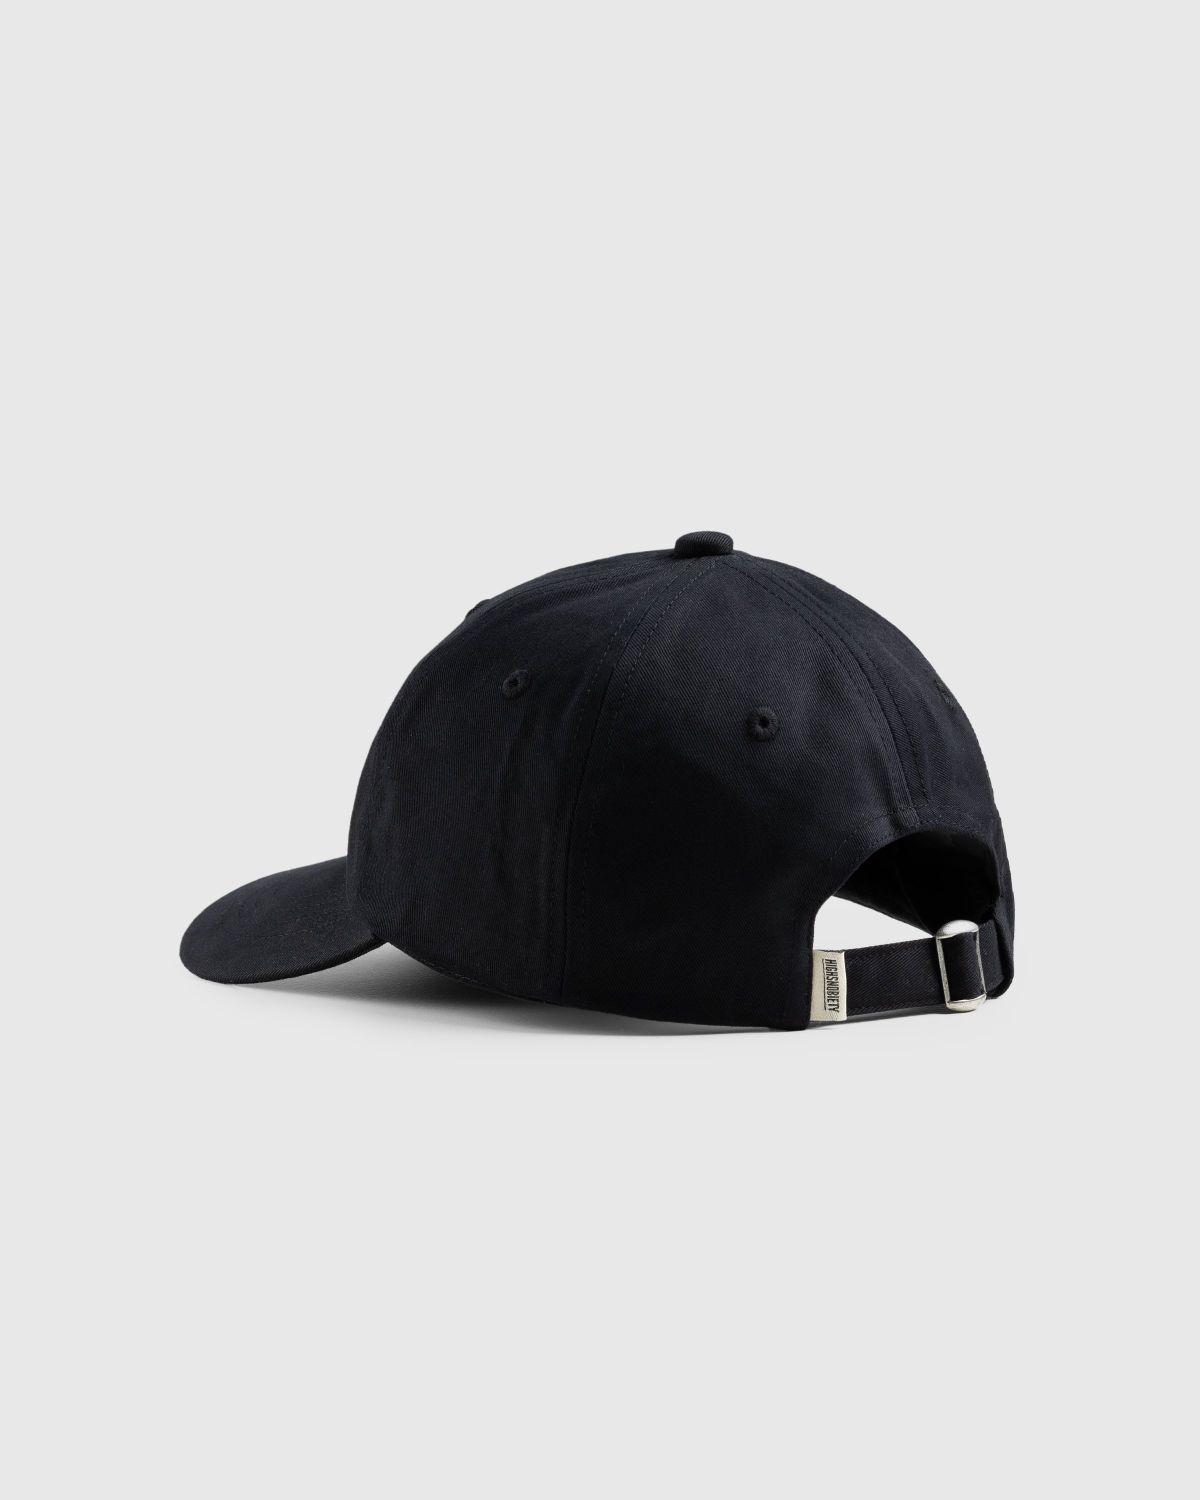 Bar Basso x Highsnobiety – Sbagliato Cap Black - Hats - Black - Image 3